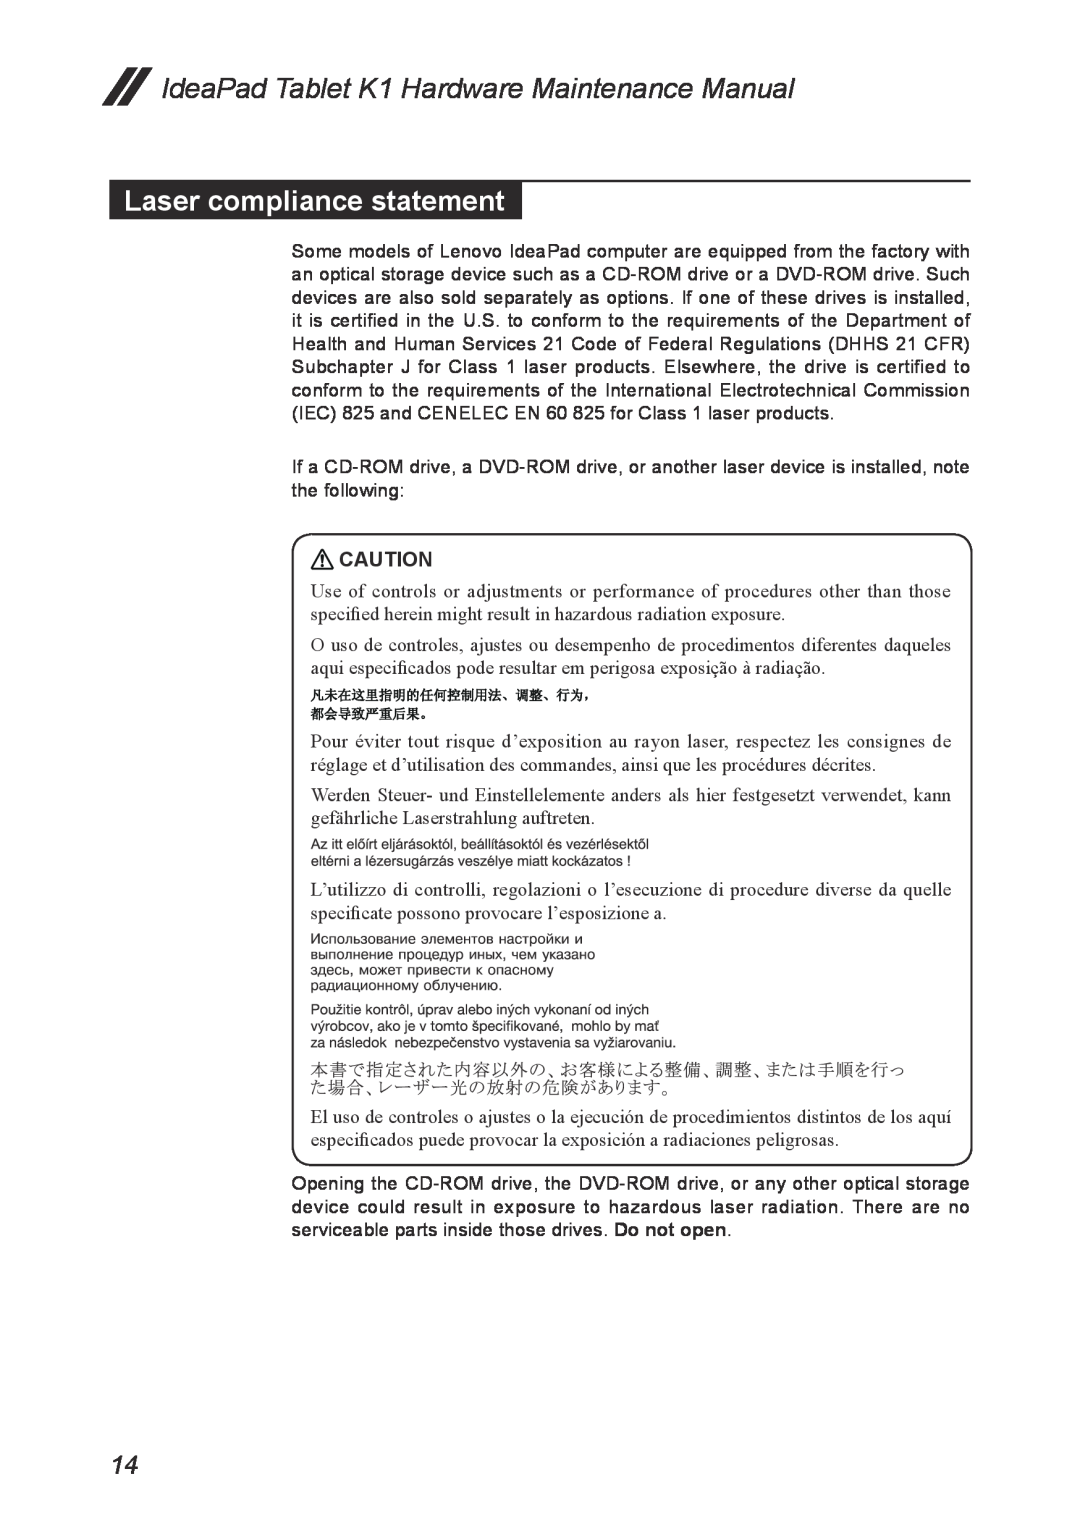 Lenovo T20x2-1, 1304XF8 manual Laser compliance statement, IdeaPad Tablet K1 Hardware Maintenance Manual 